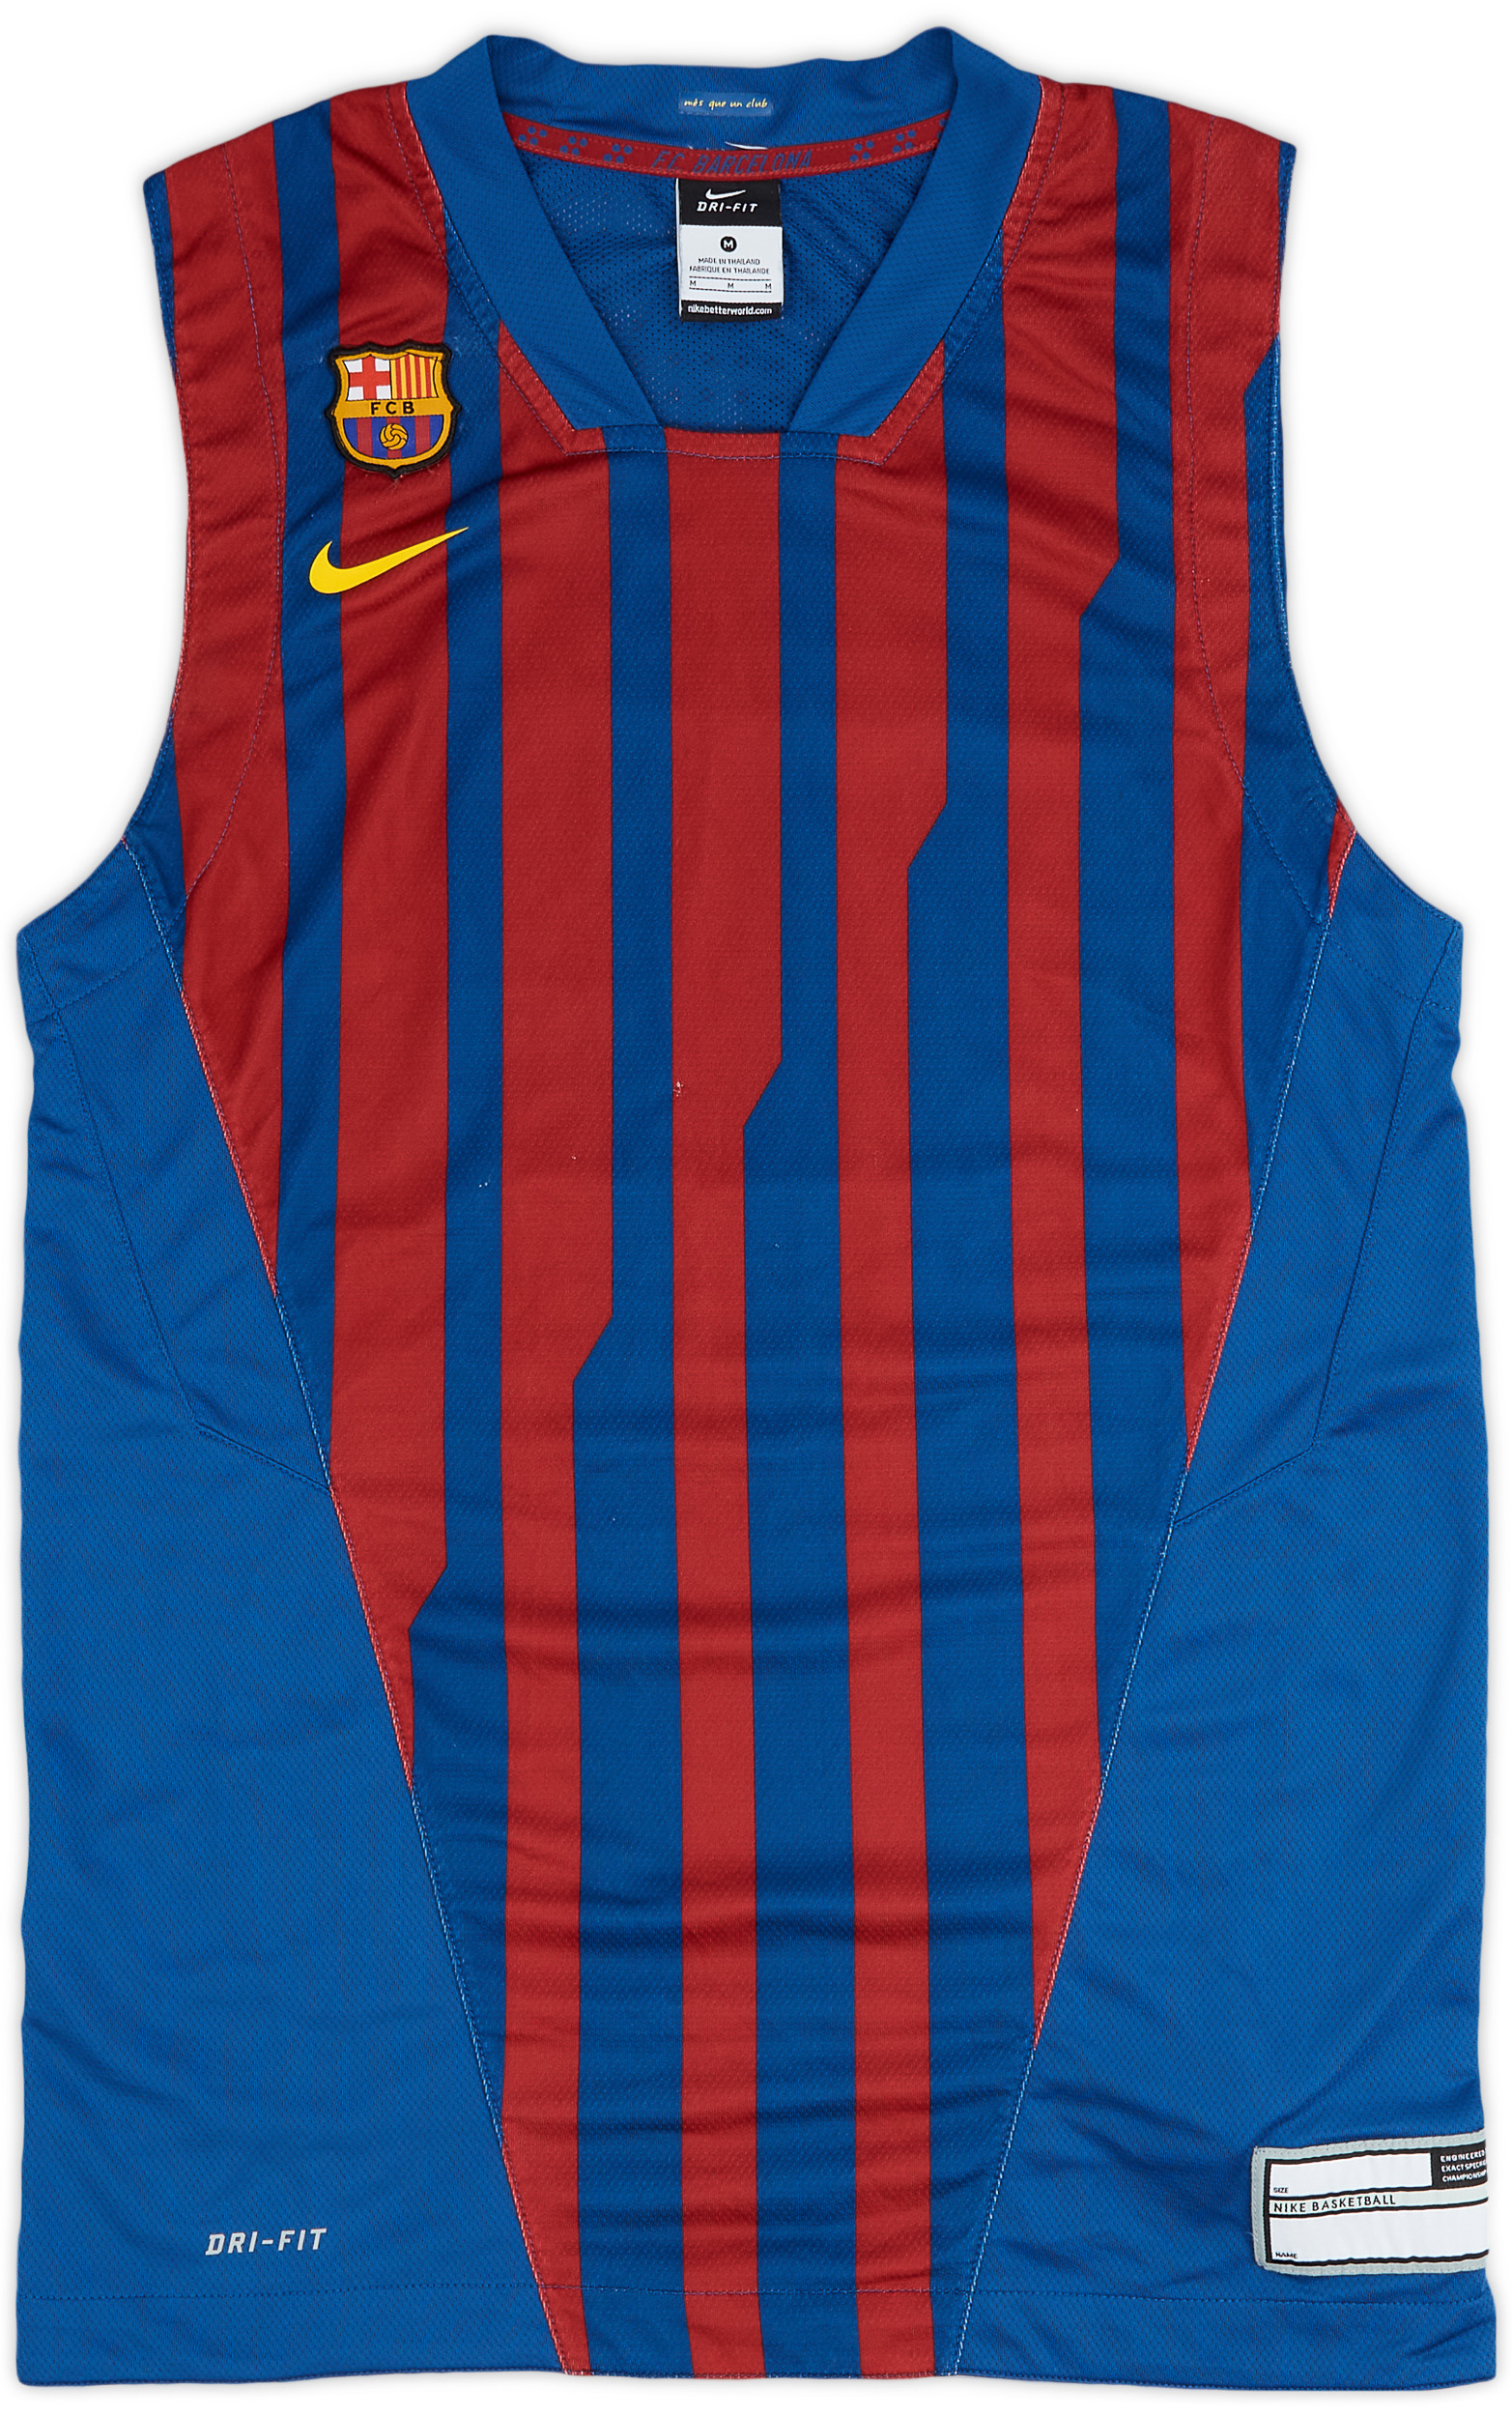 2011-12 Barcelona Nike Basketball Jersey - 9/10 - ()